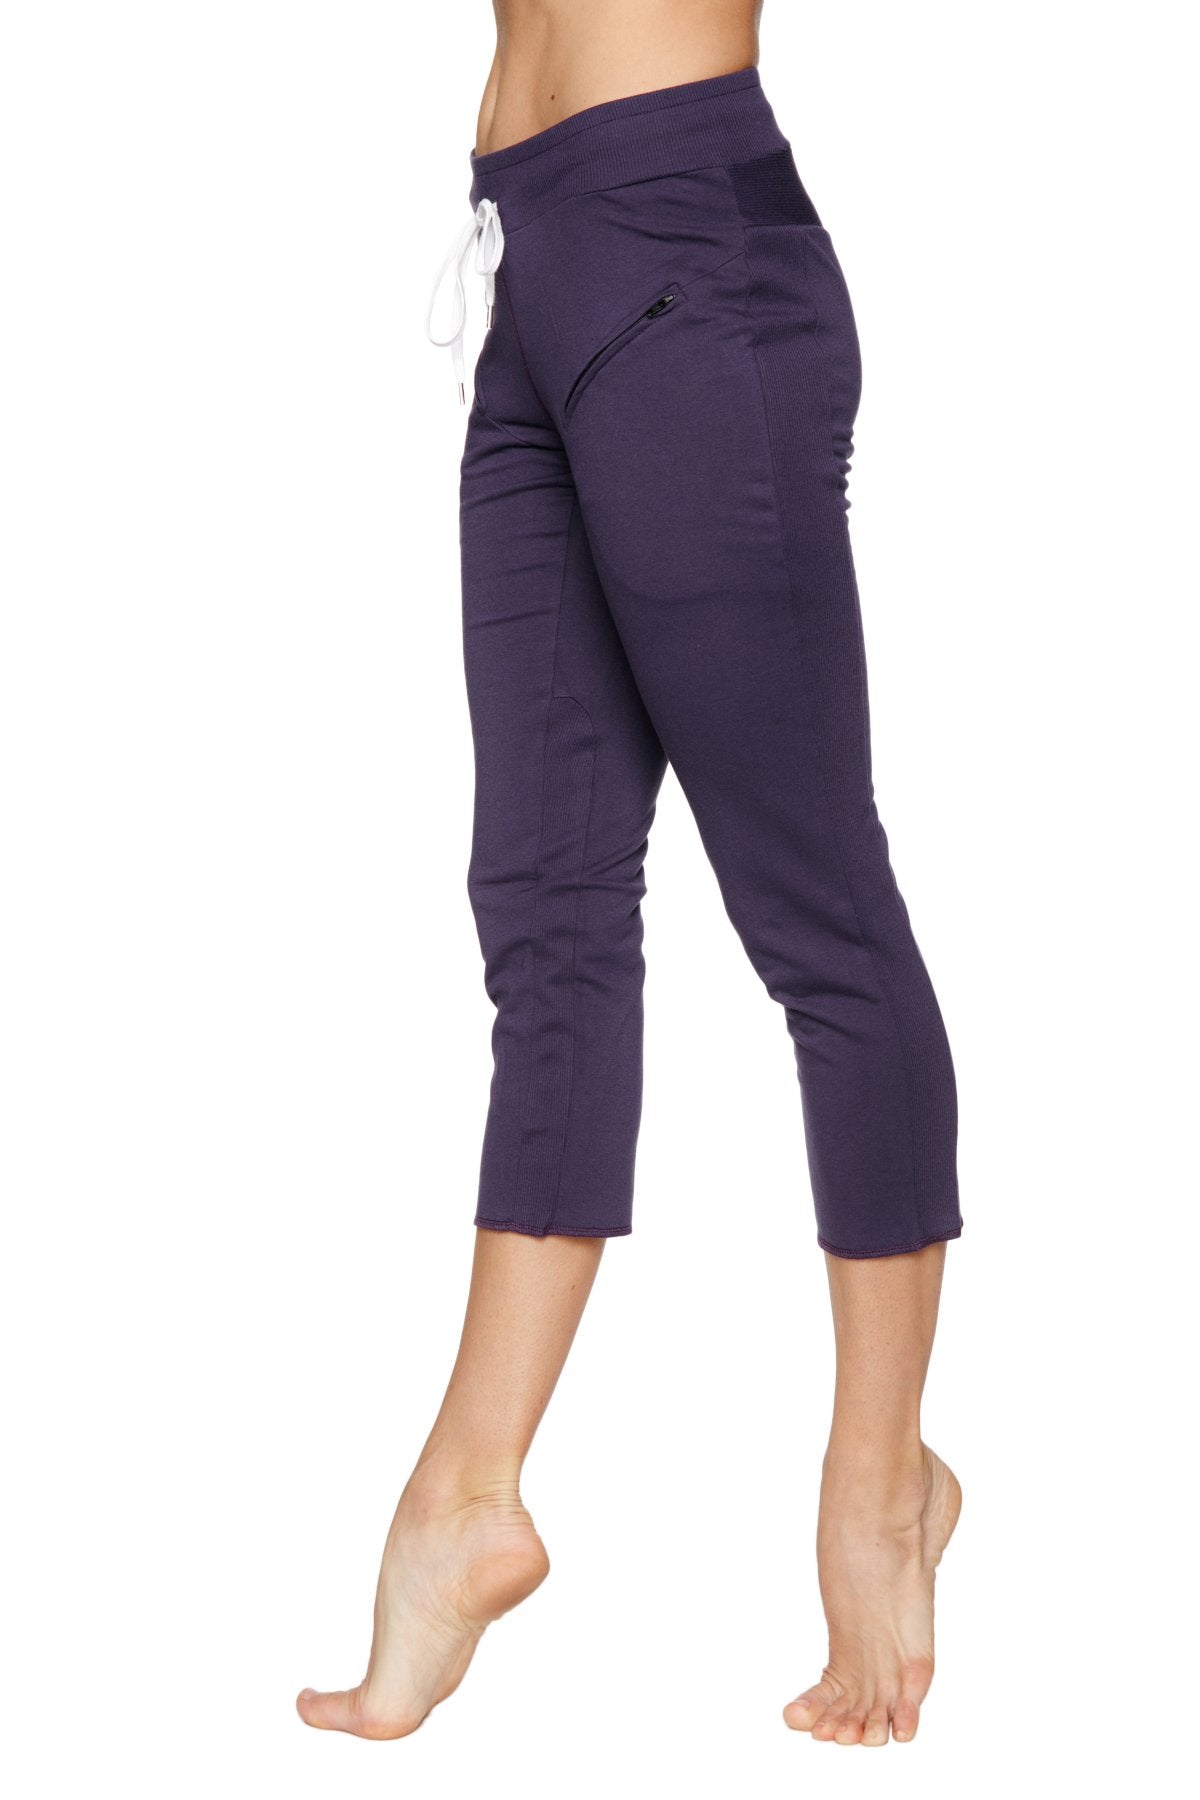 Women's 4/5 Length Zipper Pocket Capri Yoga Pant (Eggplant) by 4-rth – Yoga  Accessories